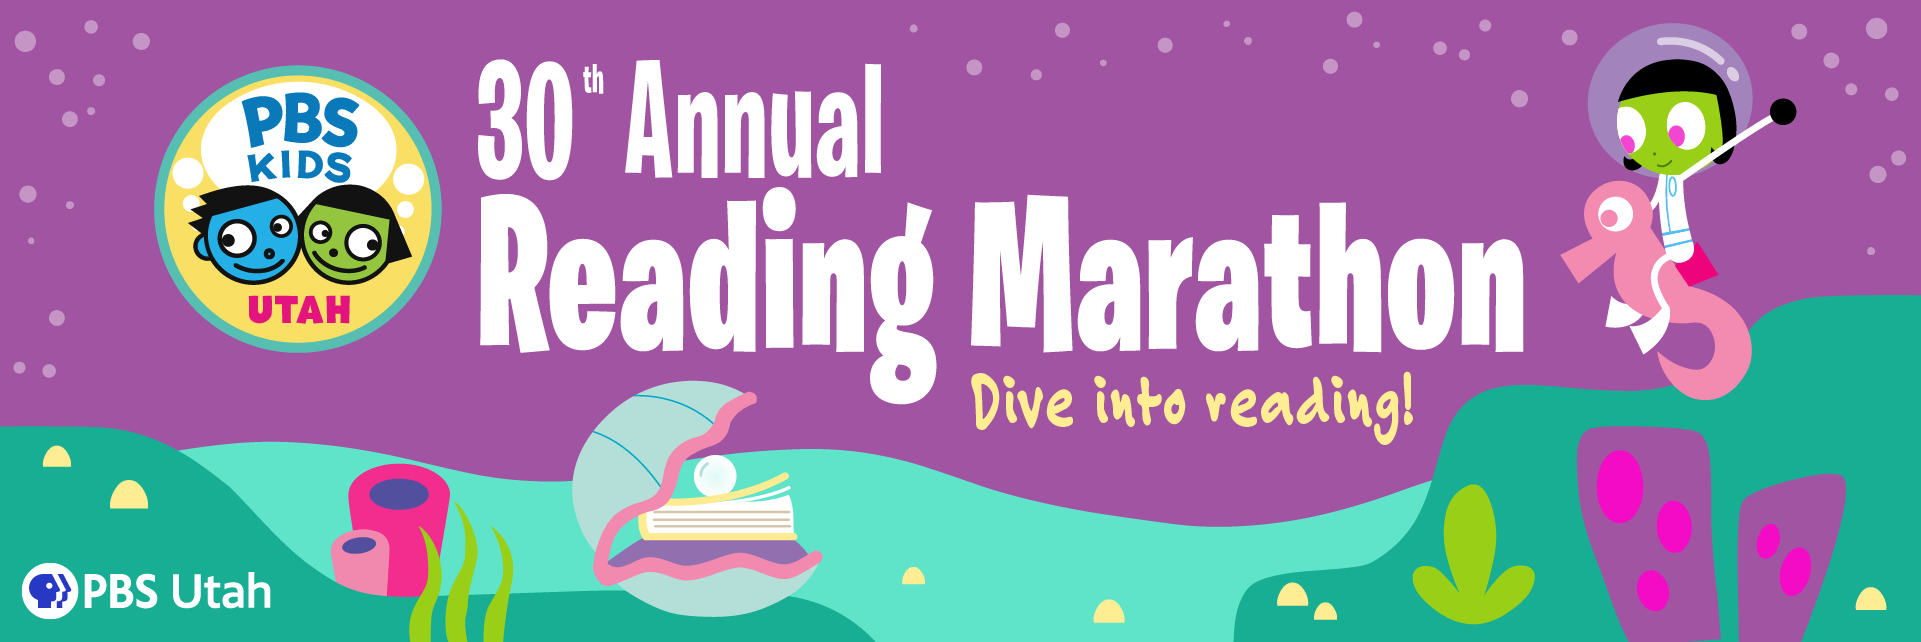 Reading Marathon Header Image